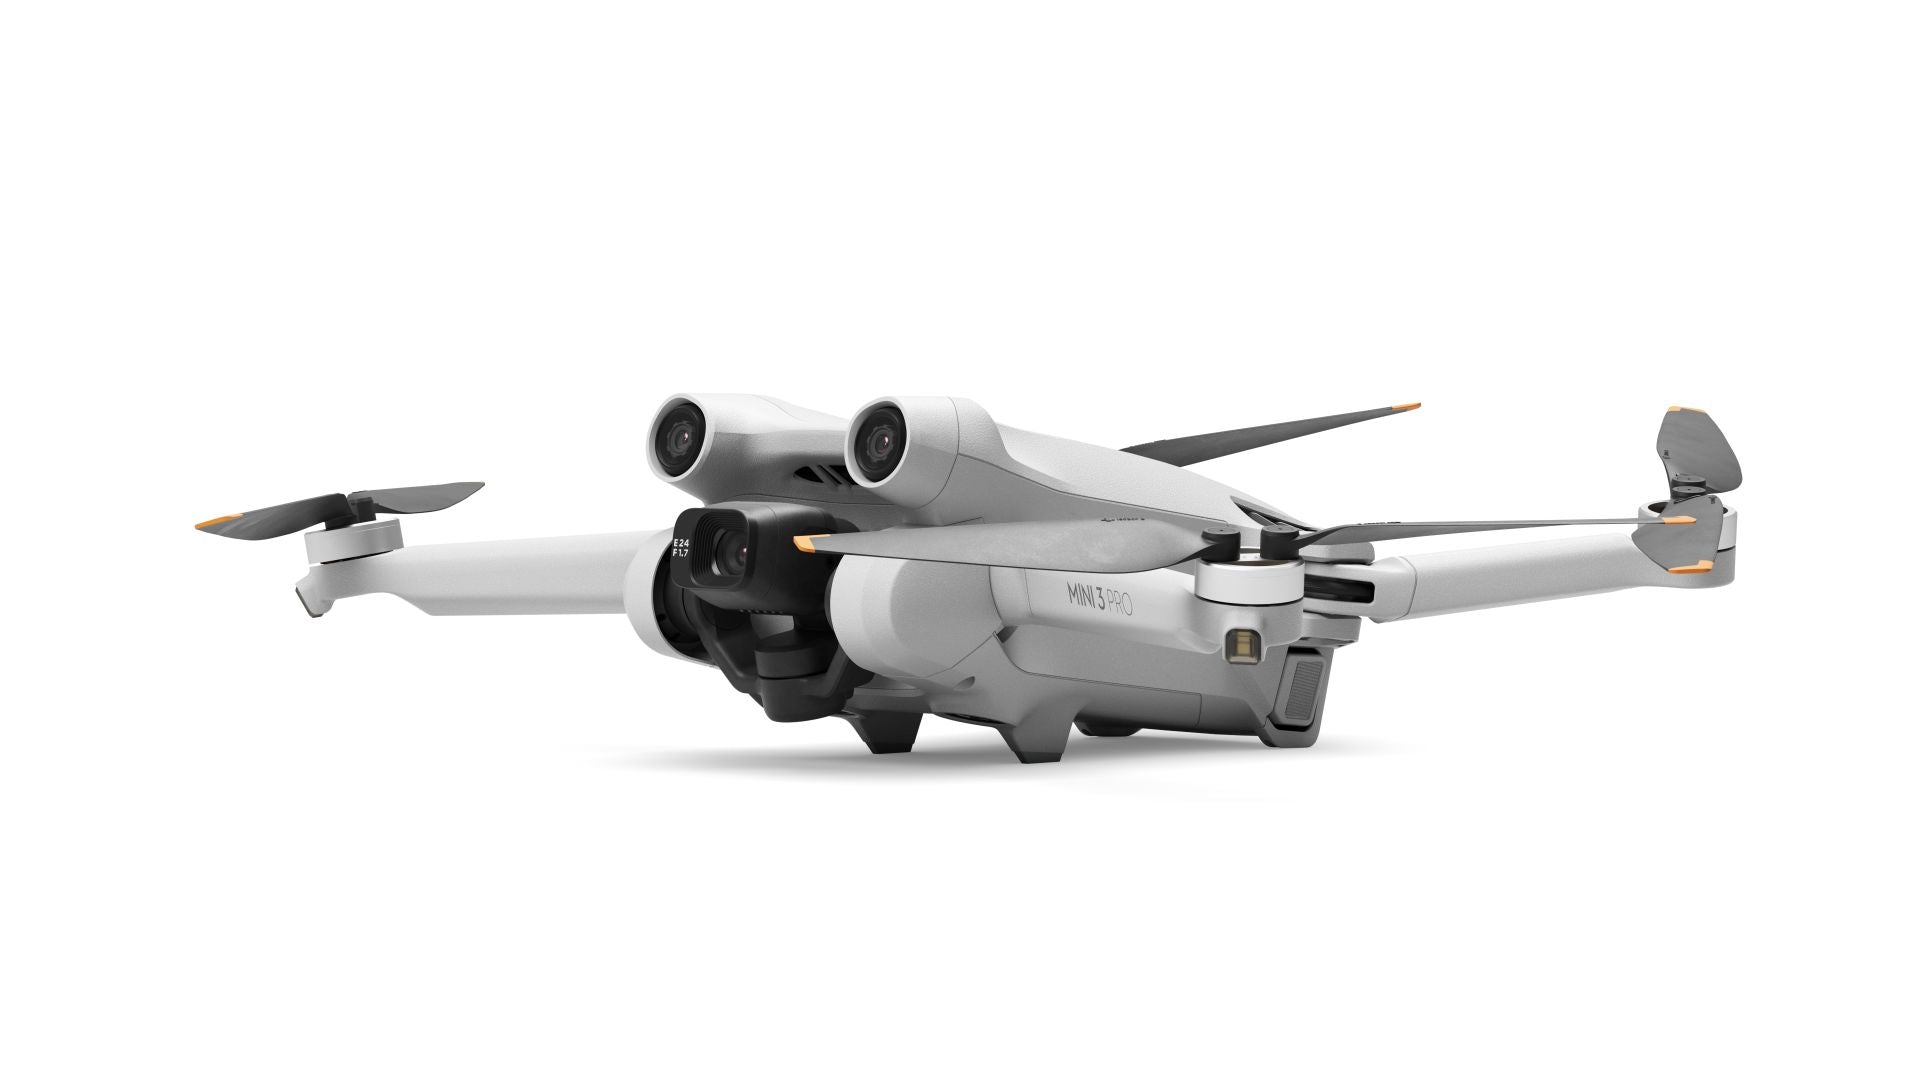 DJI Mini 3 Pro - Volez Mini, créez grand - DroneXperts